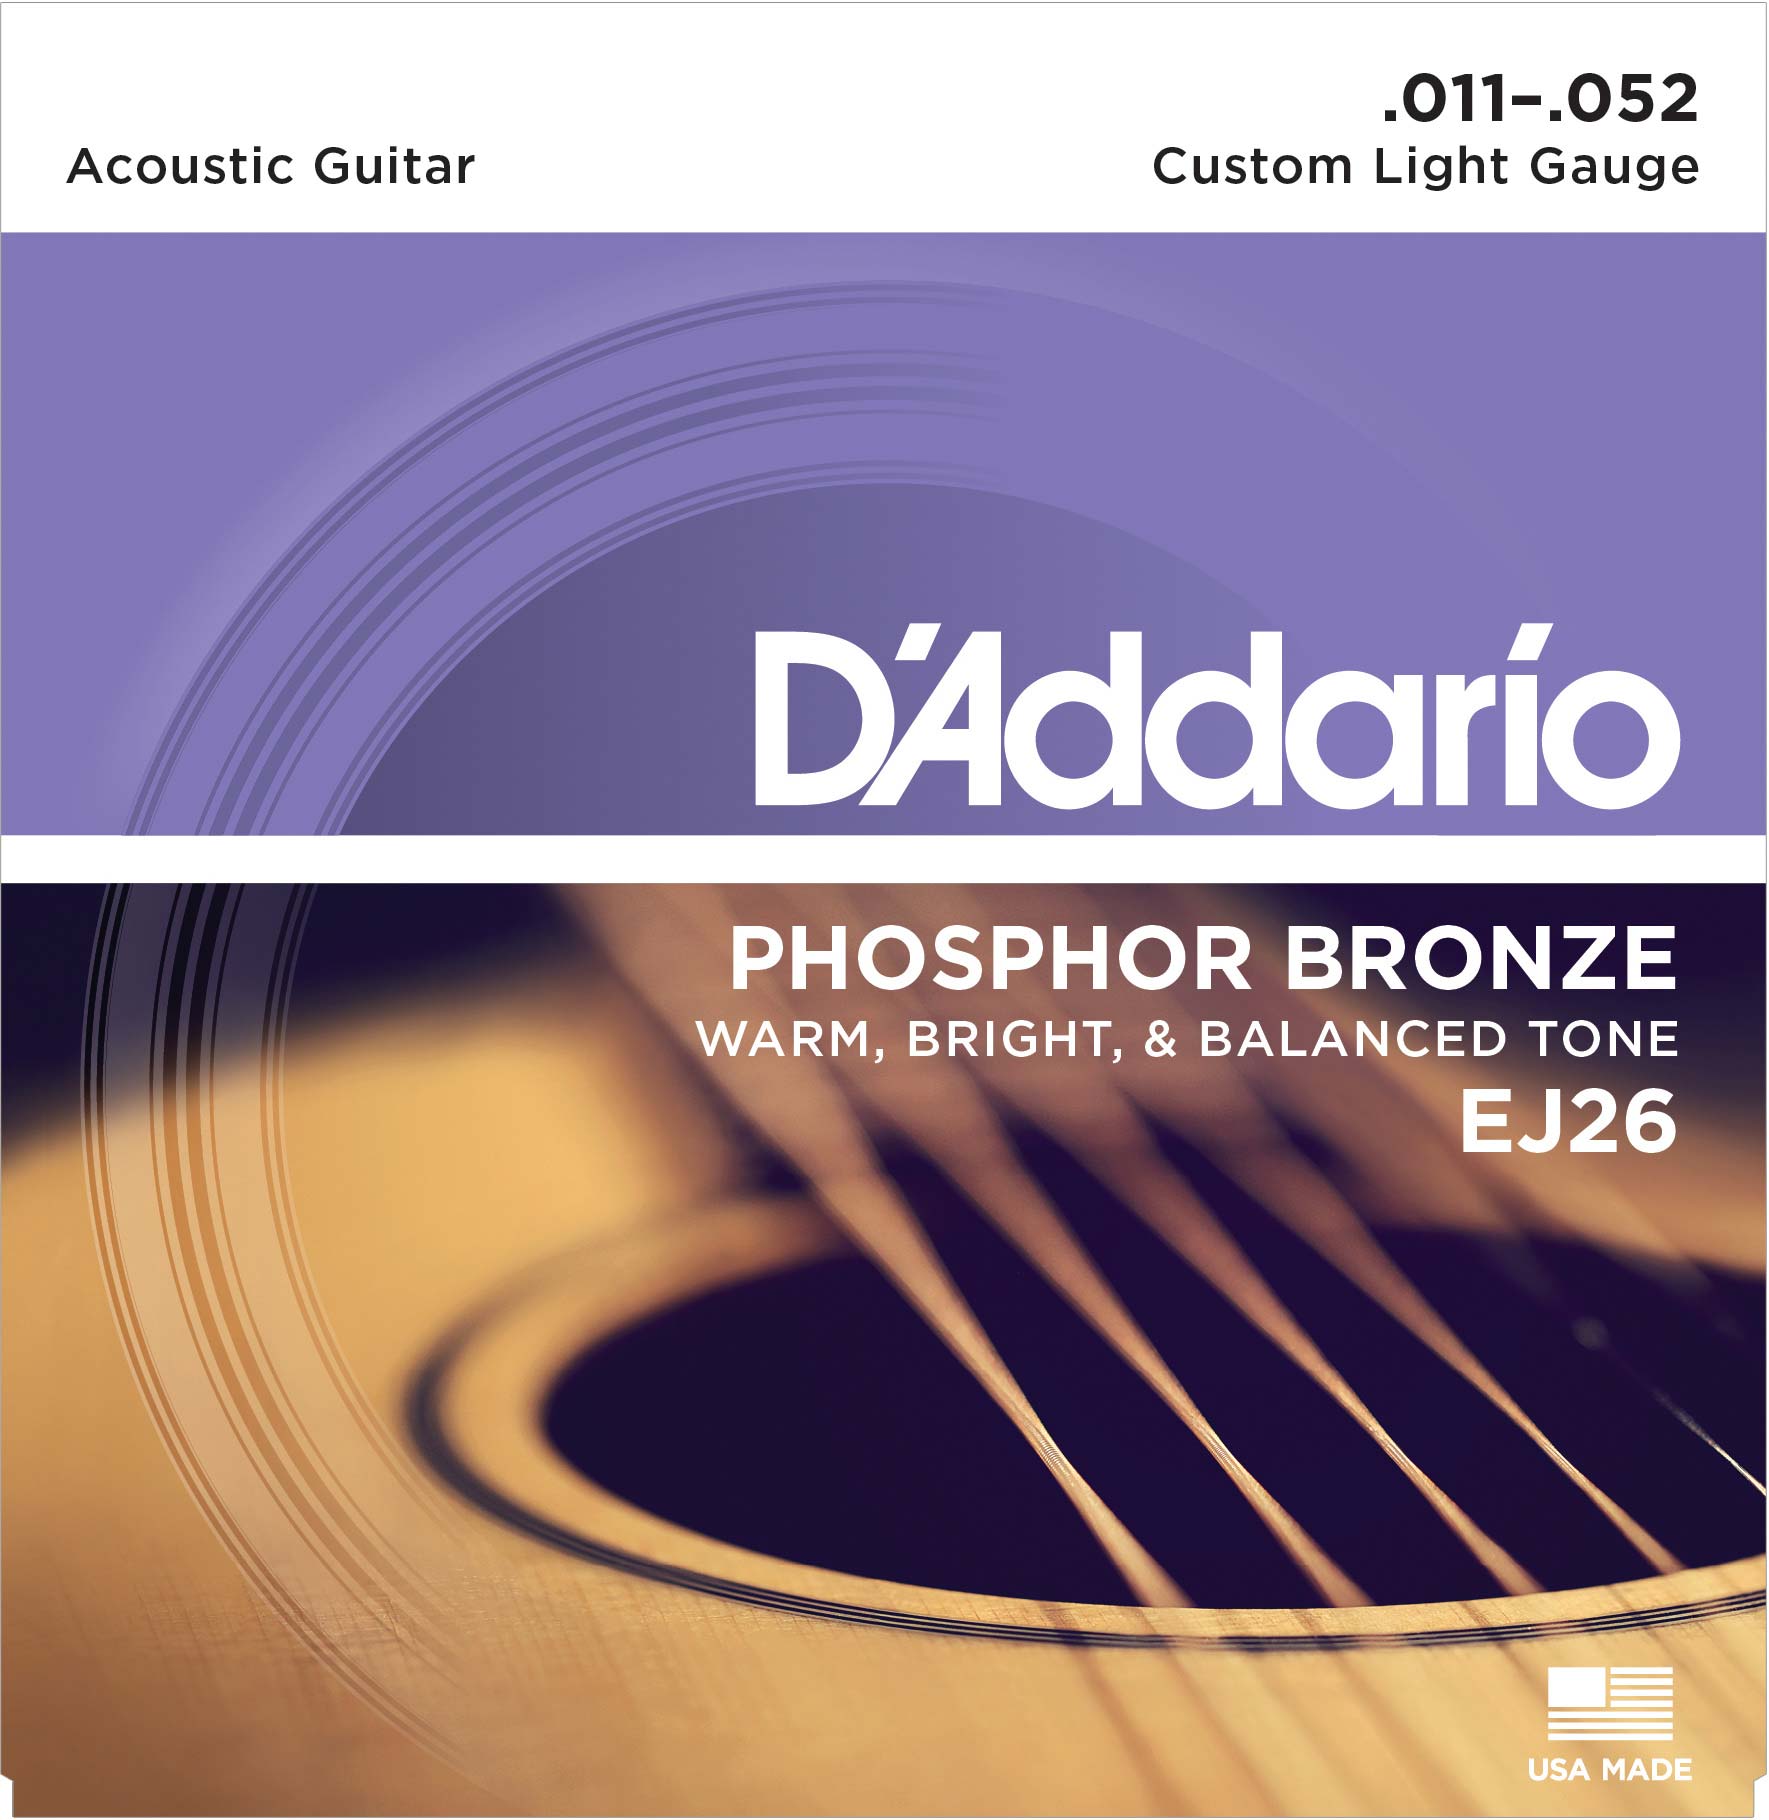 D'ADDARIO PHOSPHOR BRONZE ACOUSTIC GUITAR STRINGS CUSTOM LIGHT .011-.052